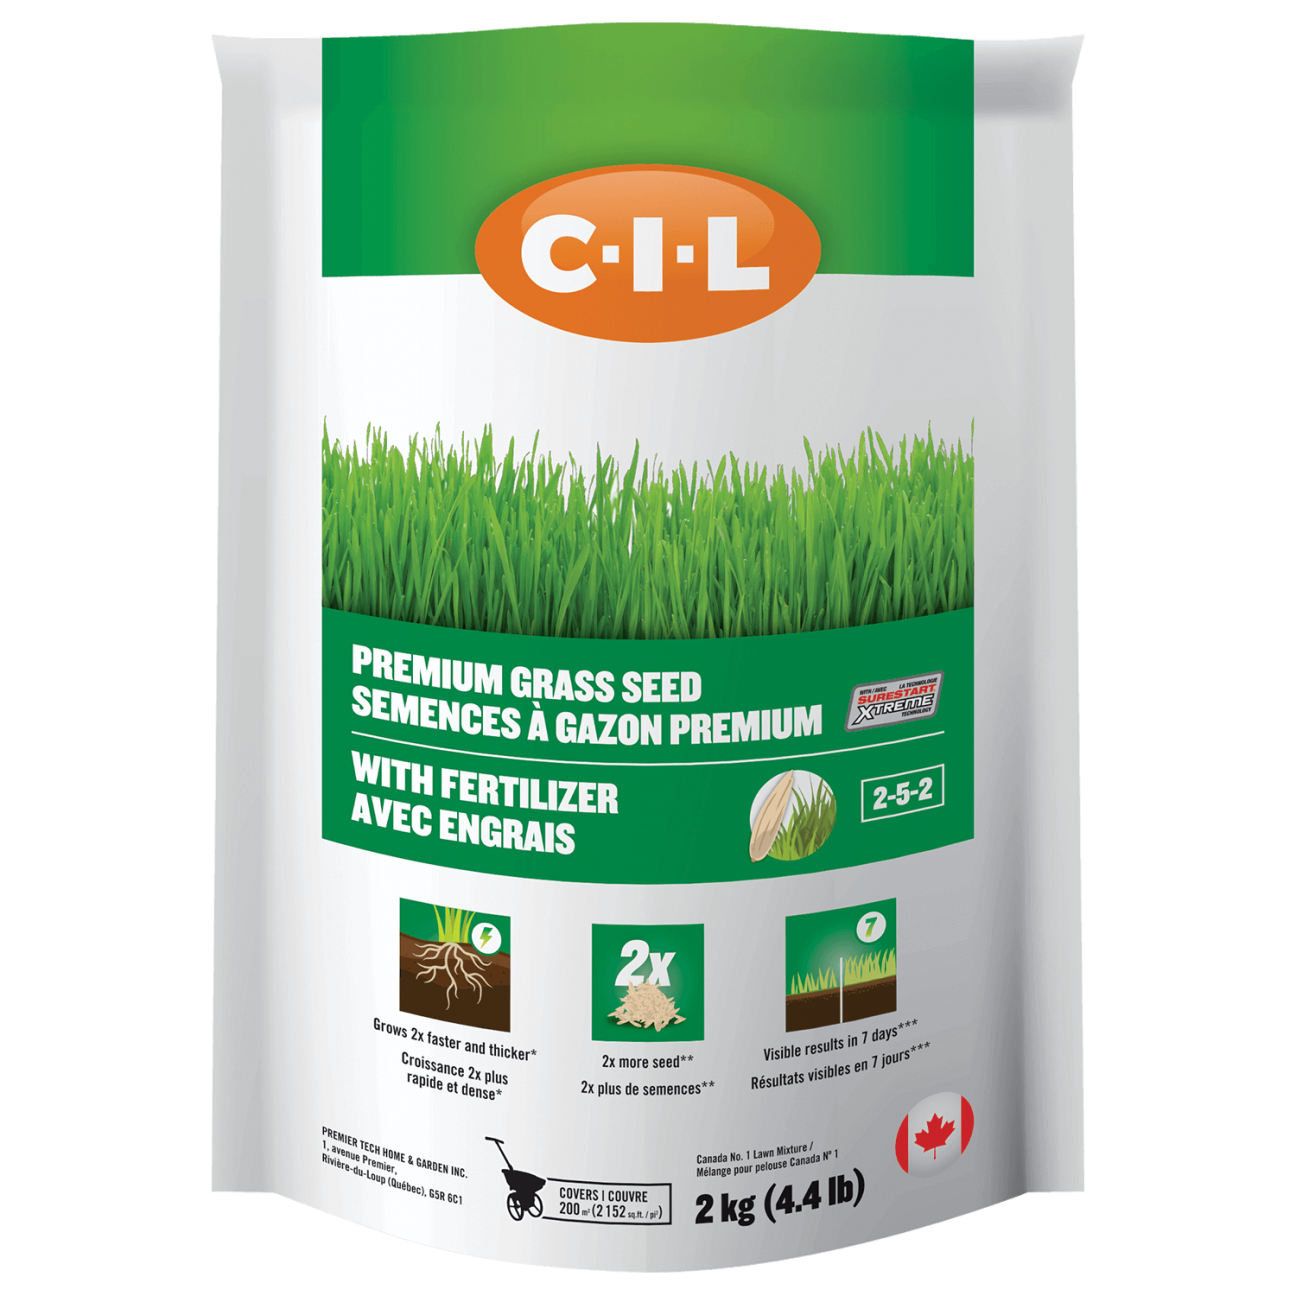 C I L Premium Grass Seed With Fertilizer 2 5 2 C I L Lawn And